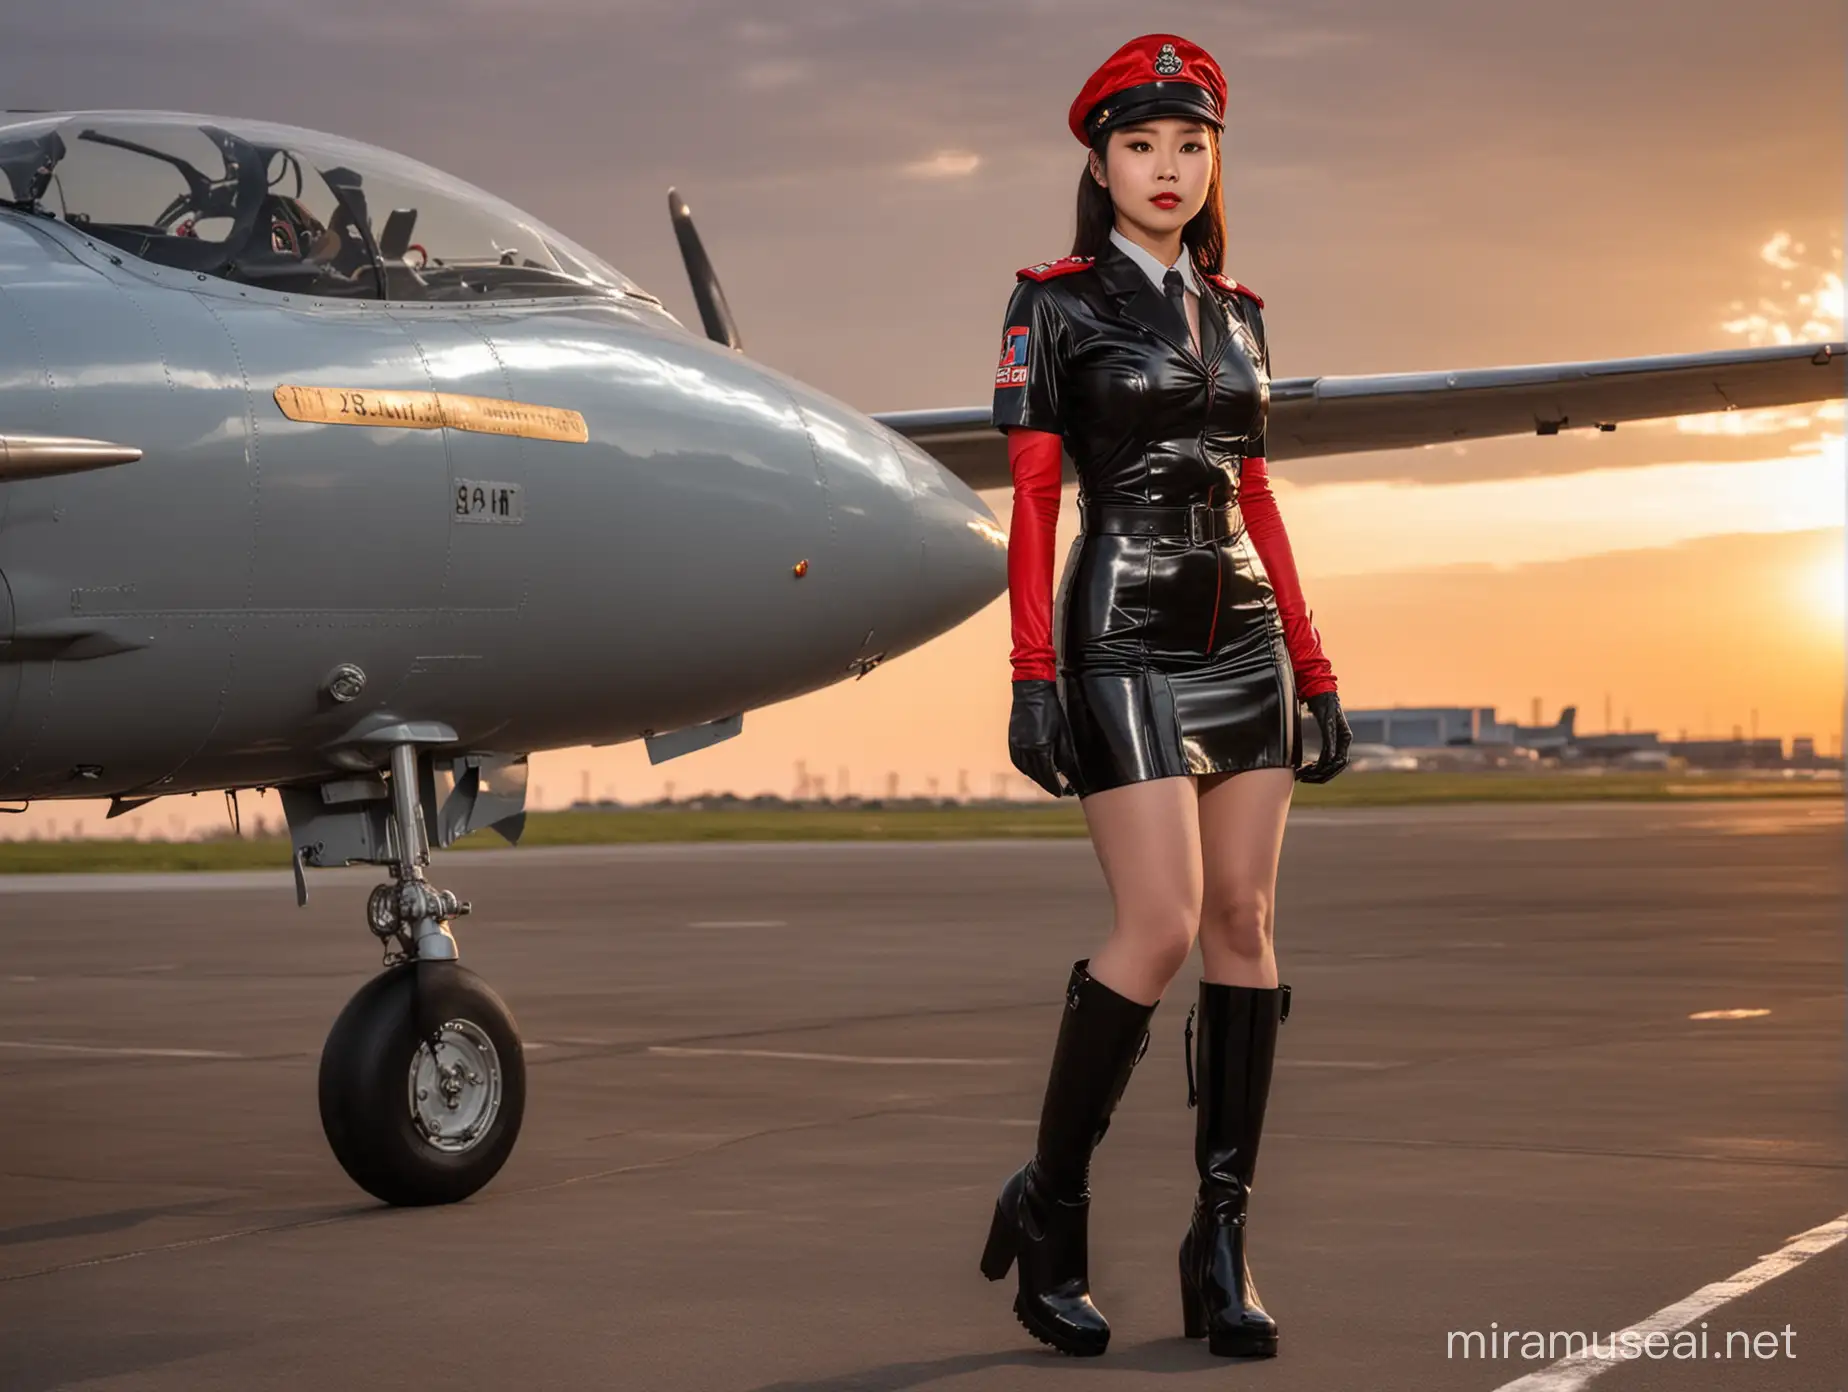 East Asian woman, short-sleeve tight latex uniform, military pilot, shiny skirt, red gloves, black overknee platform boots, pilot hat, sunset lighting, runway